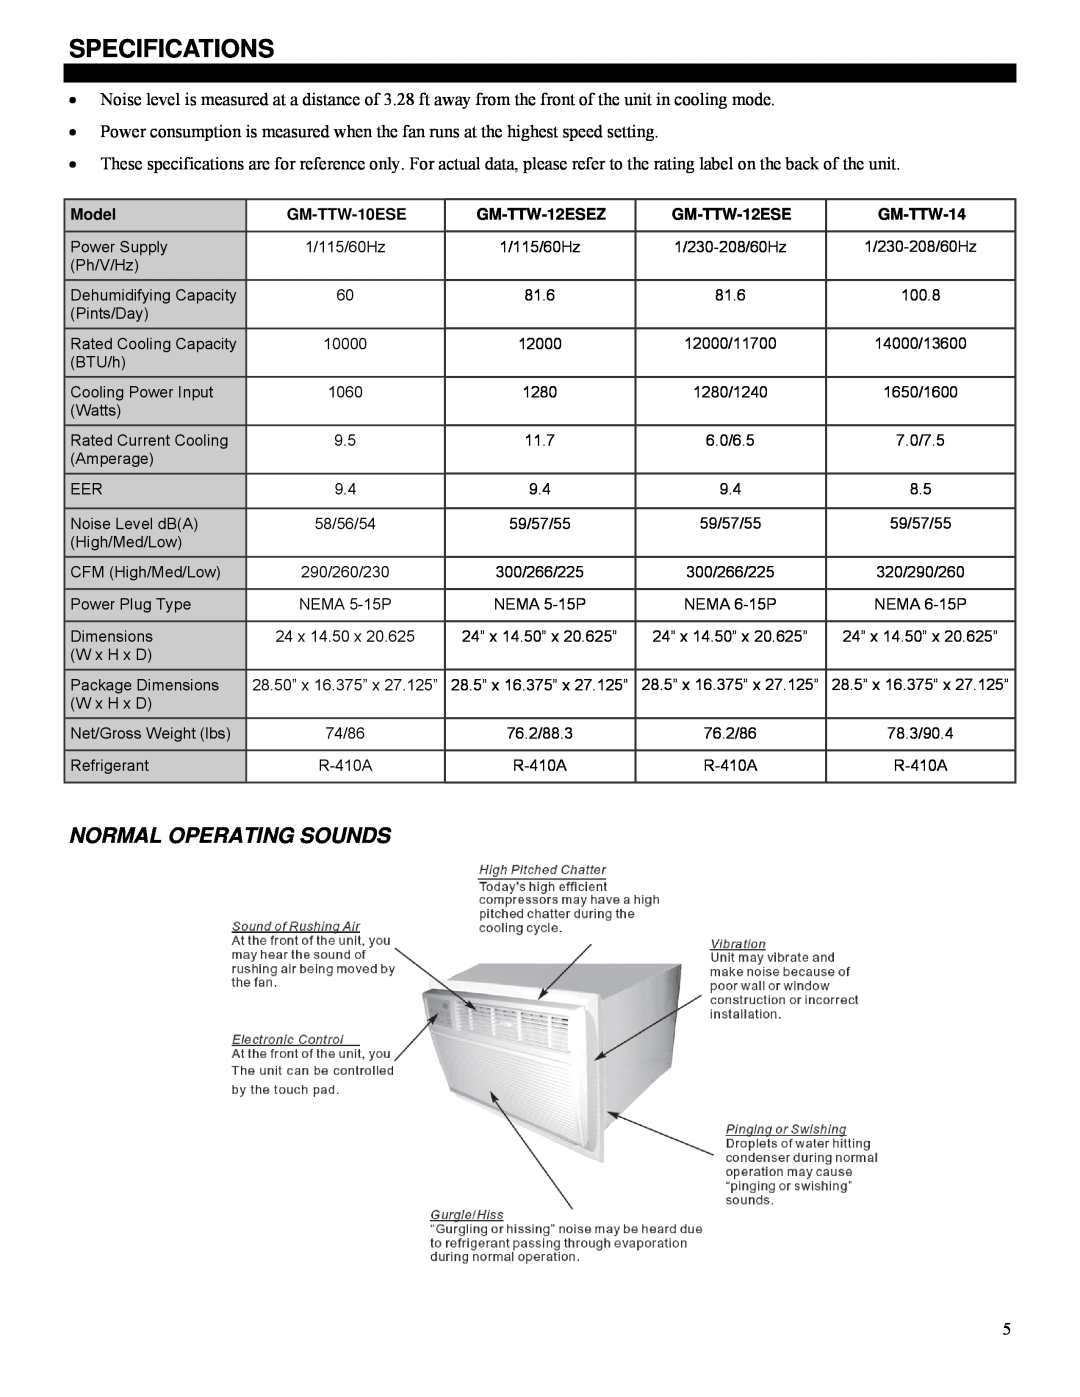 Soleus Air GM-TTW-10ESE, GM-TTW-14, GM-TTW-12ESEZ manual Specifications, Normal Operating Sounds 